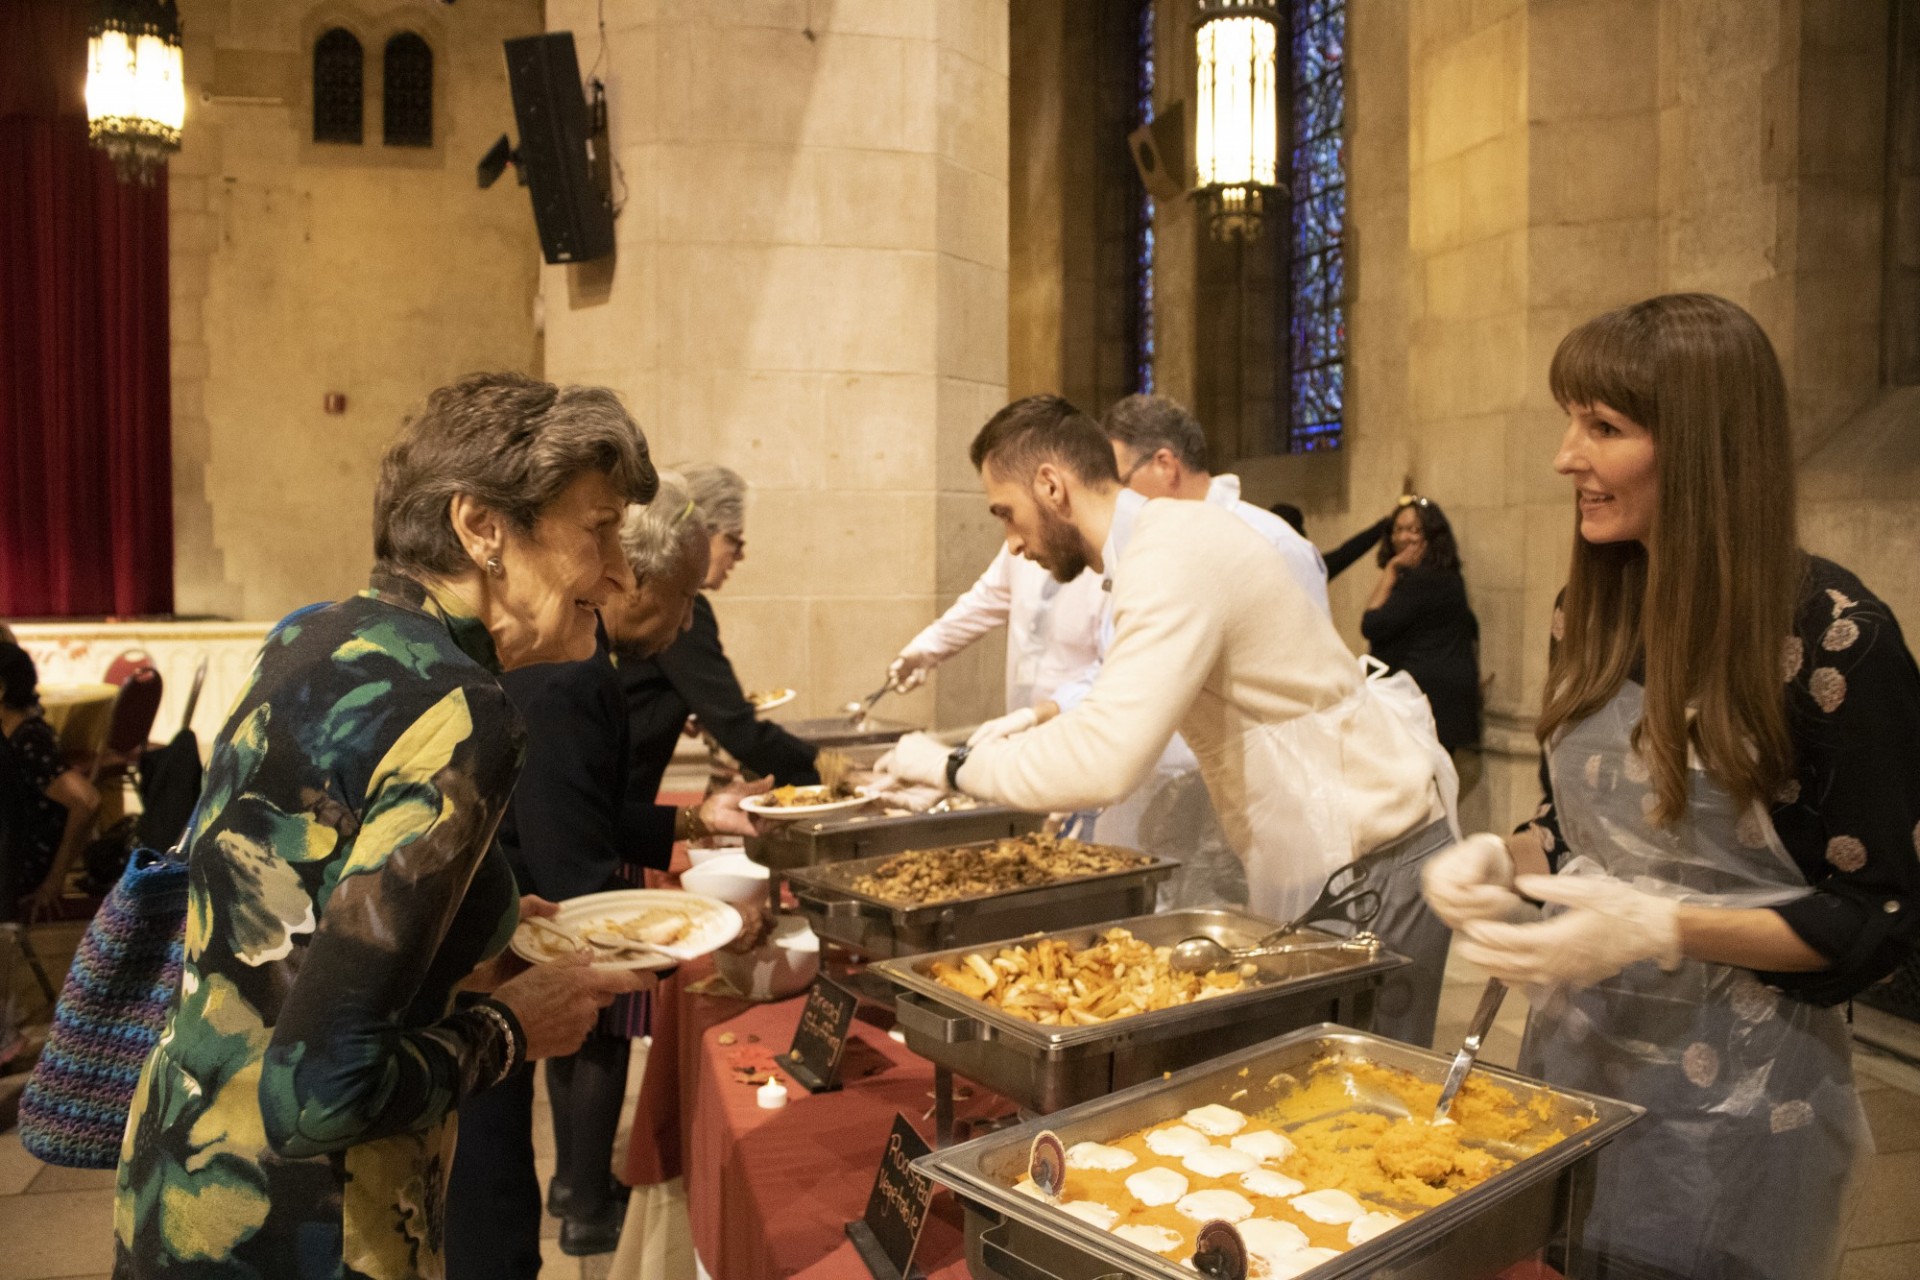 A senior citizen receives food from a Thanksgiving buffet from a volunteer